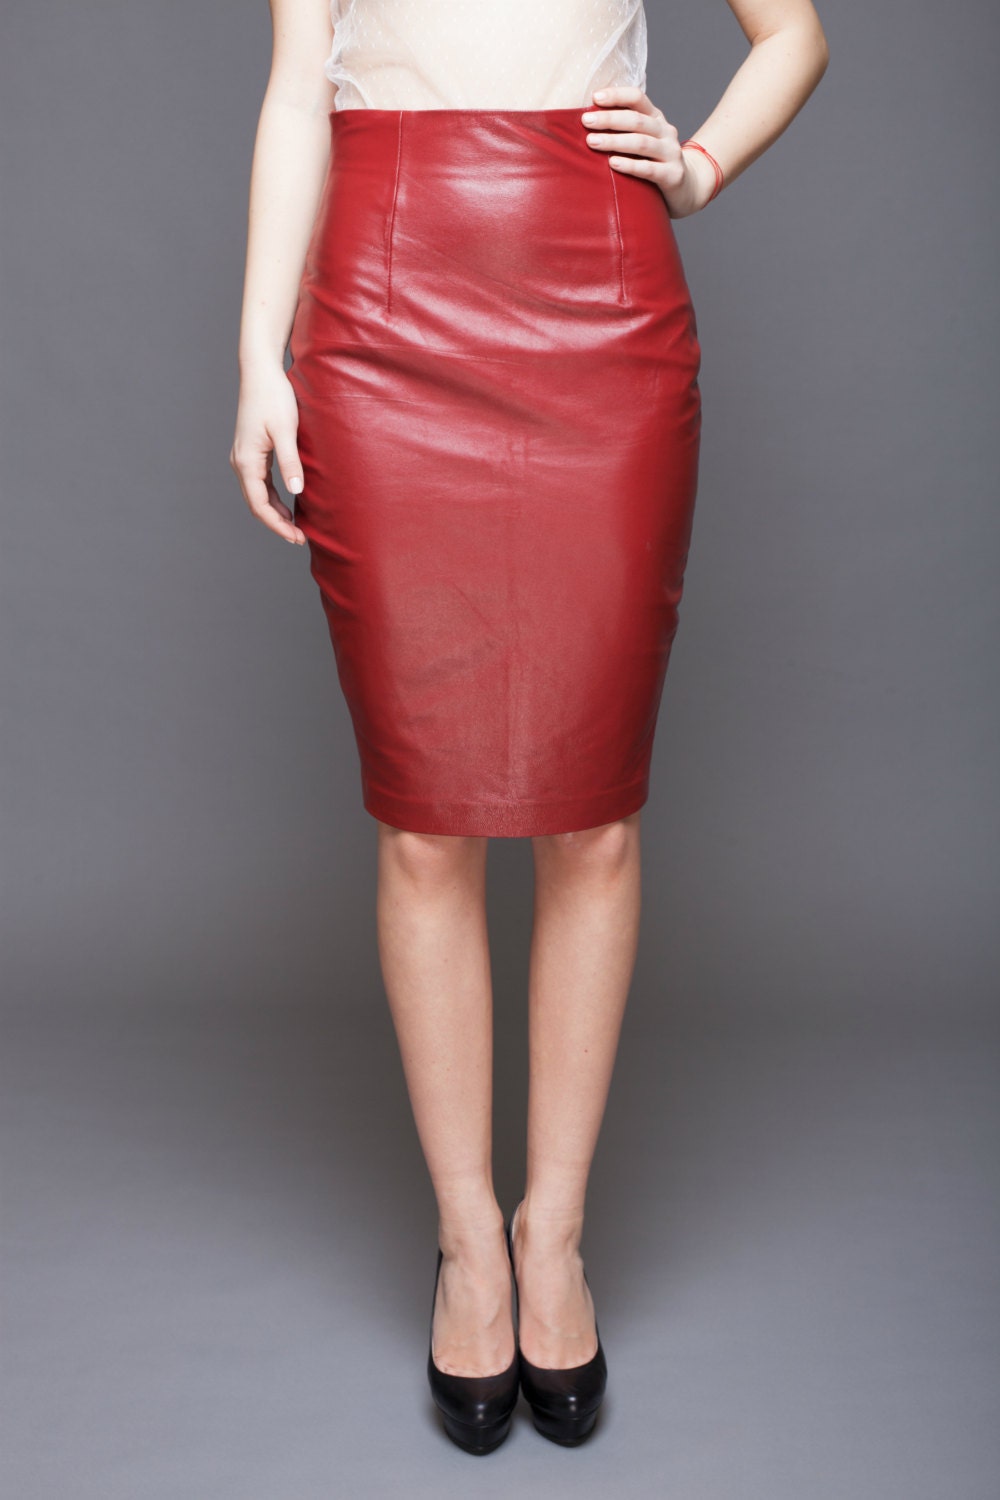 La Lune genuine leather skirt